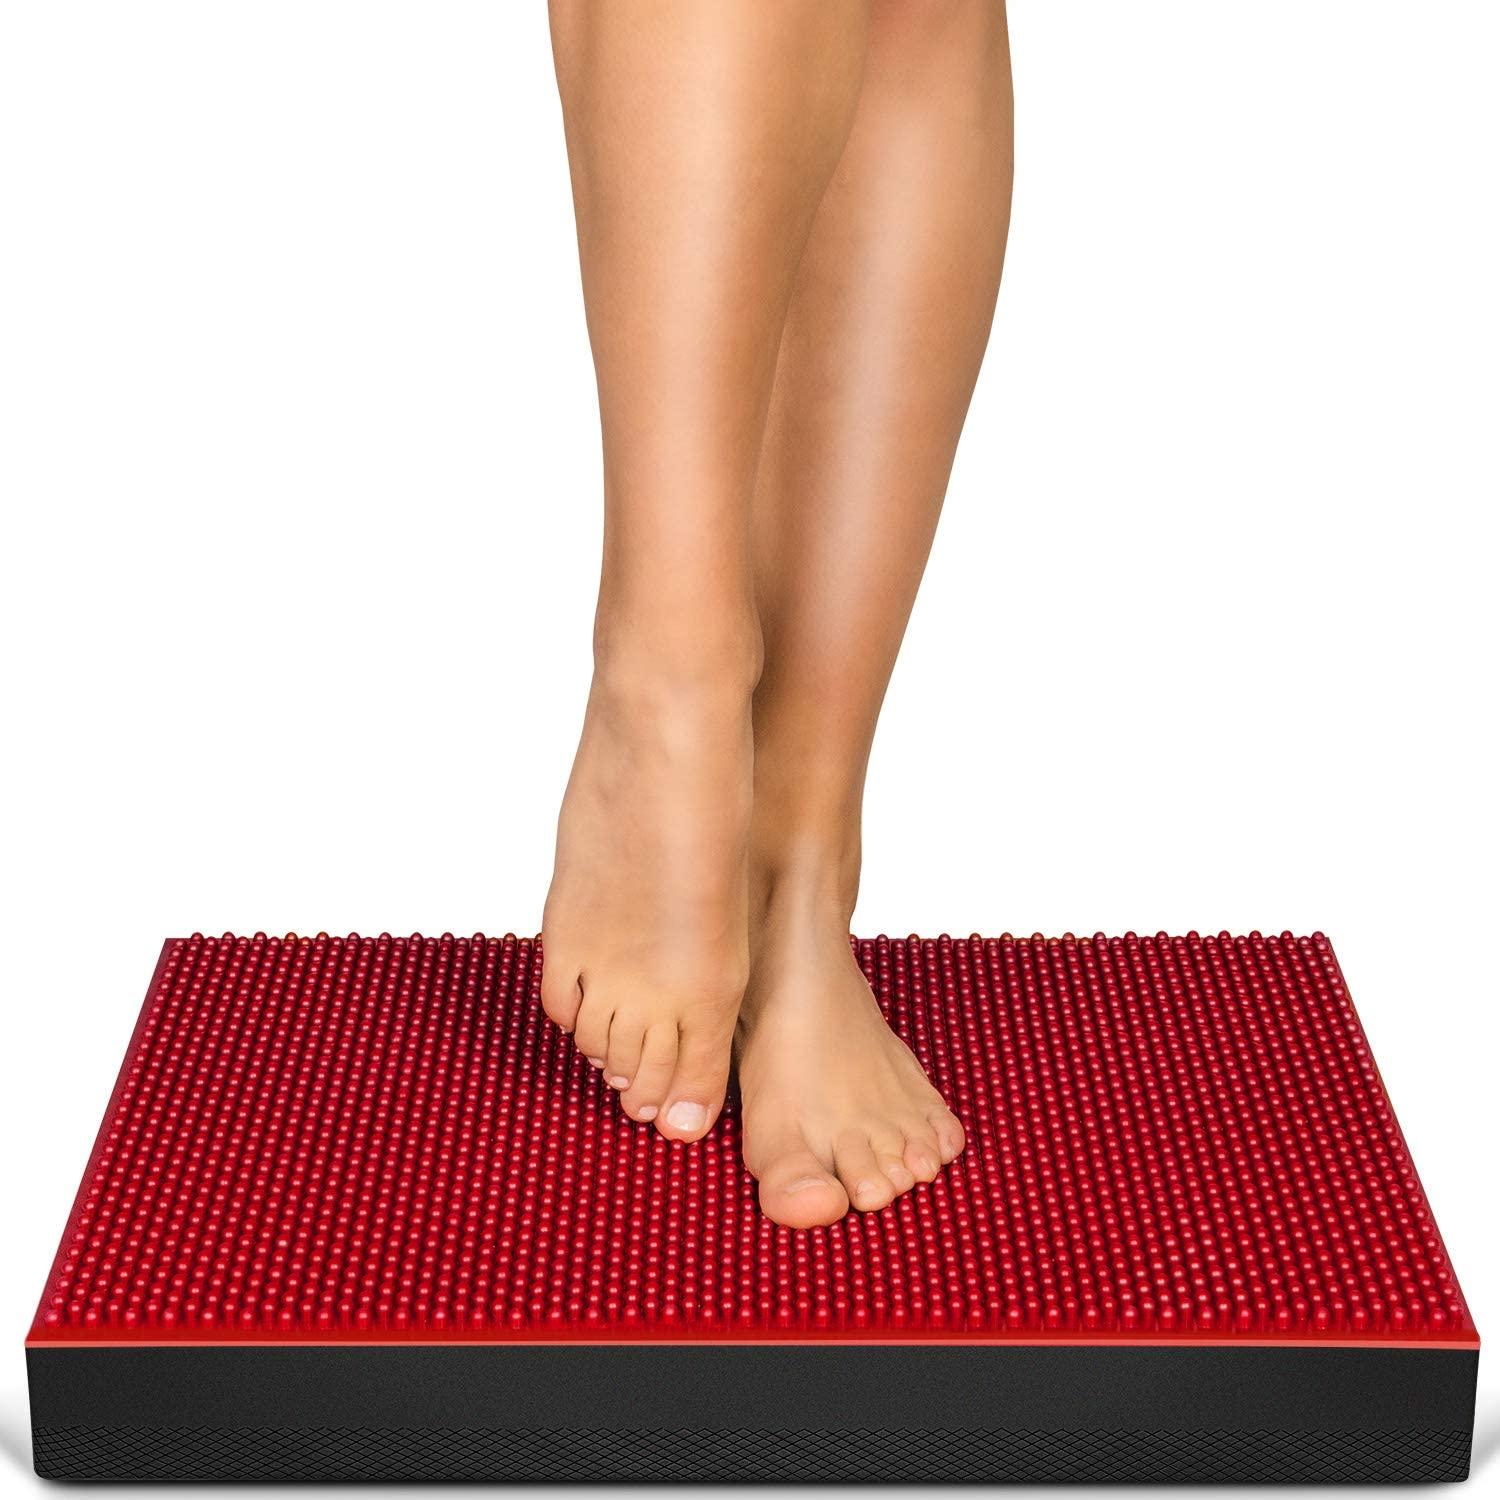 yoga mat for menSoft Exercise Balance Pad Large Yoga Knee Pat Trainer Fitness Foam Cushion Mat for Stability Training 